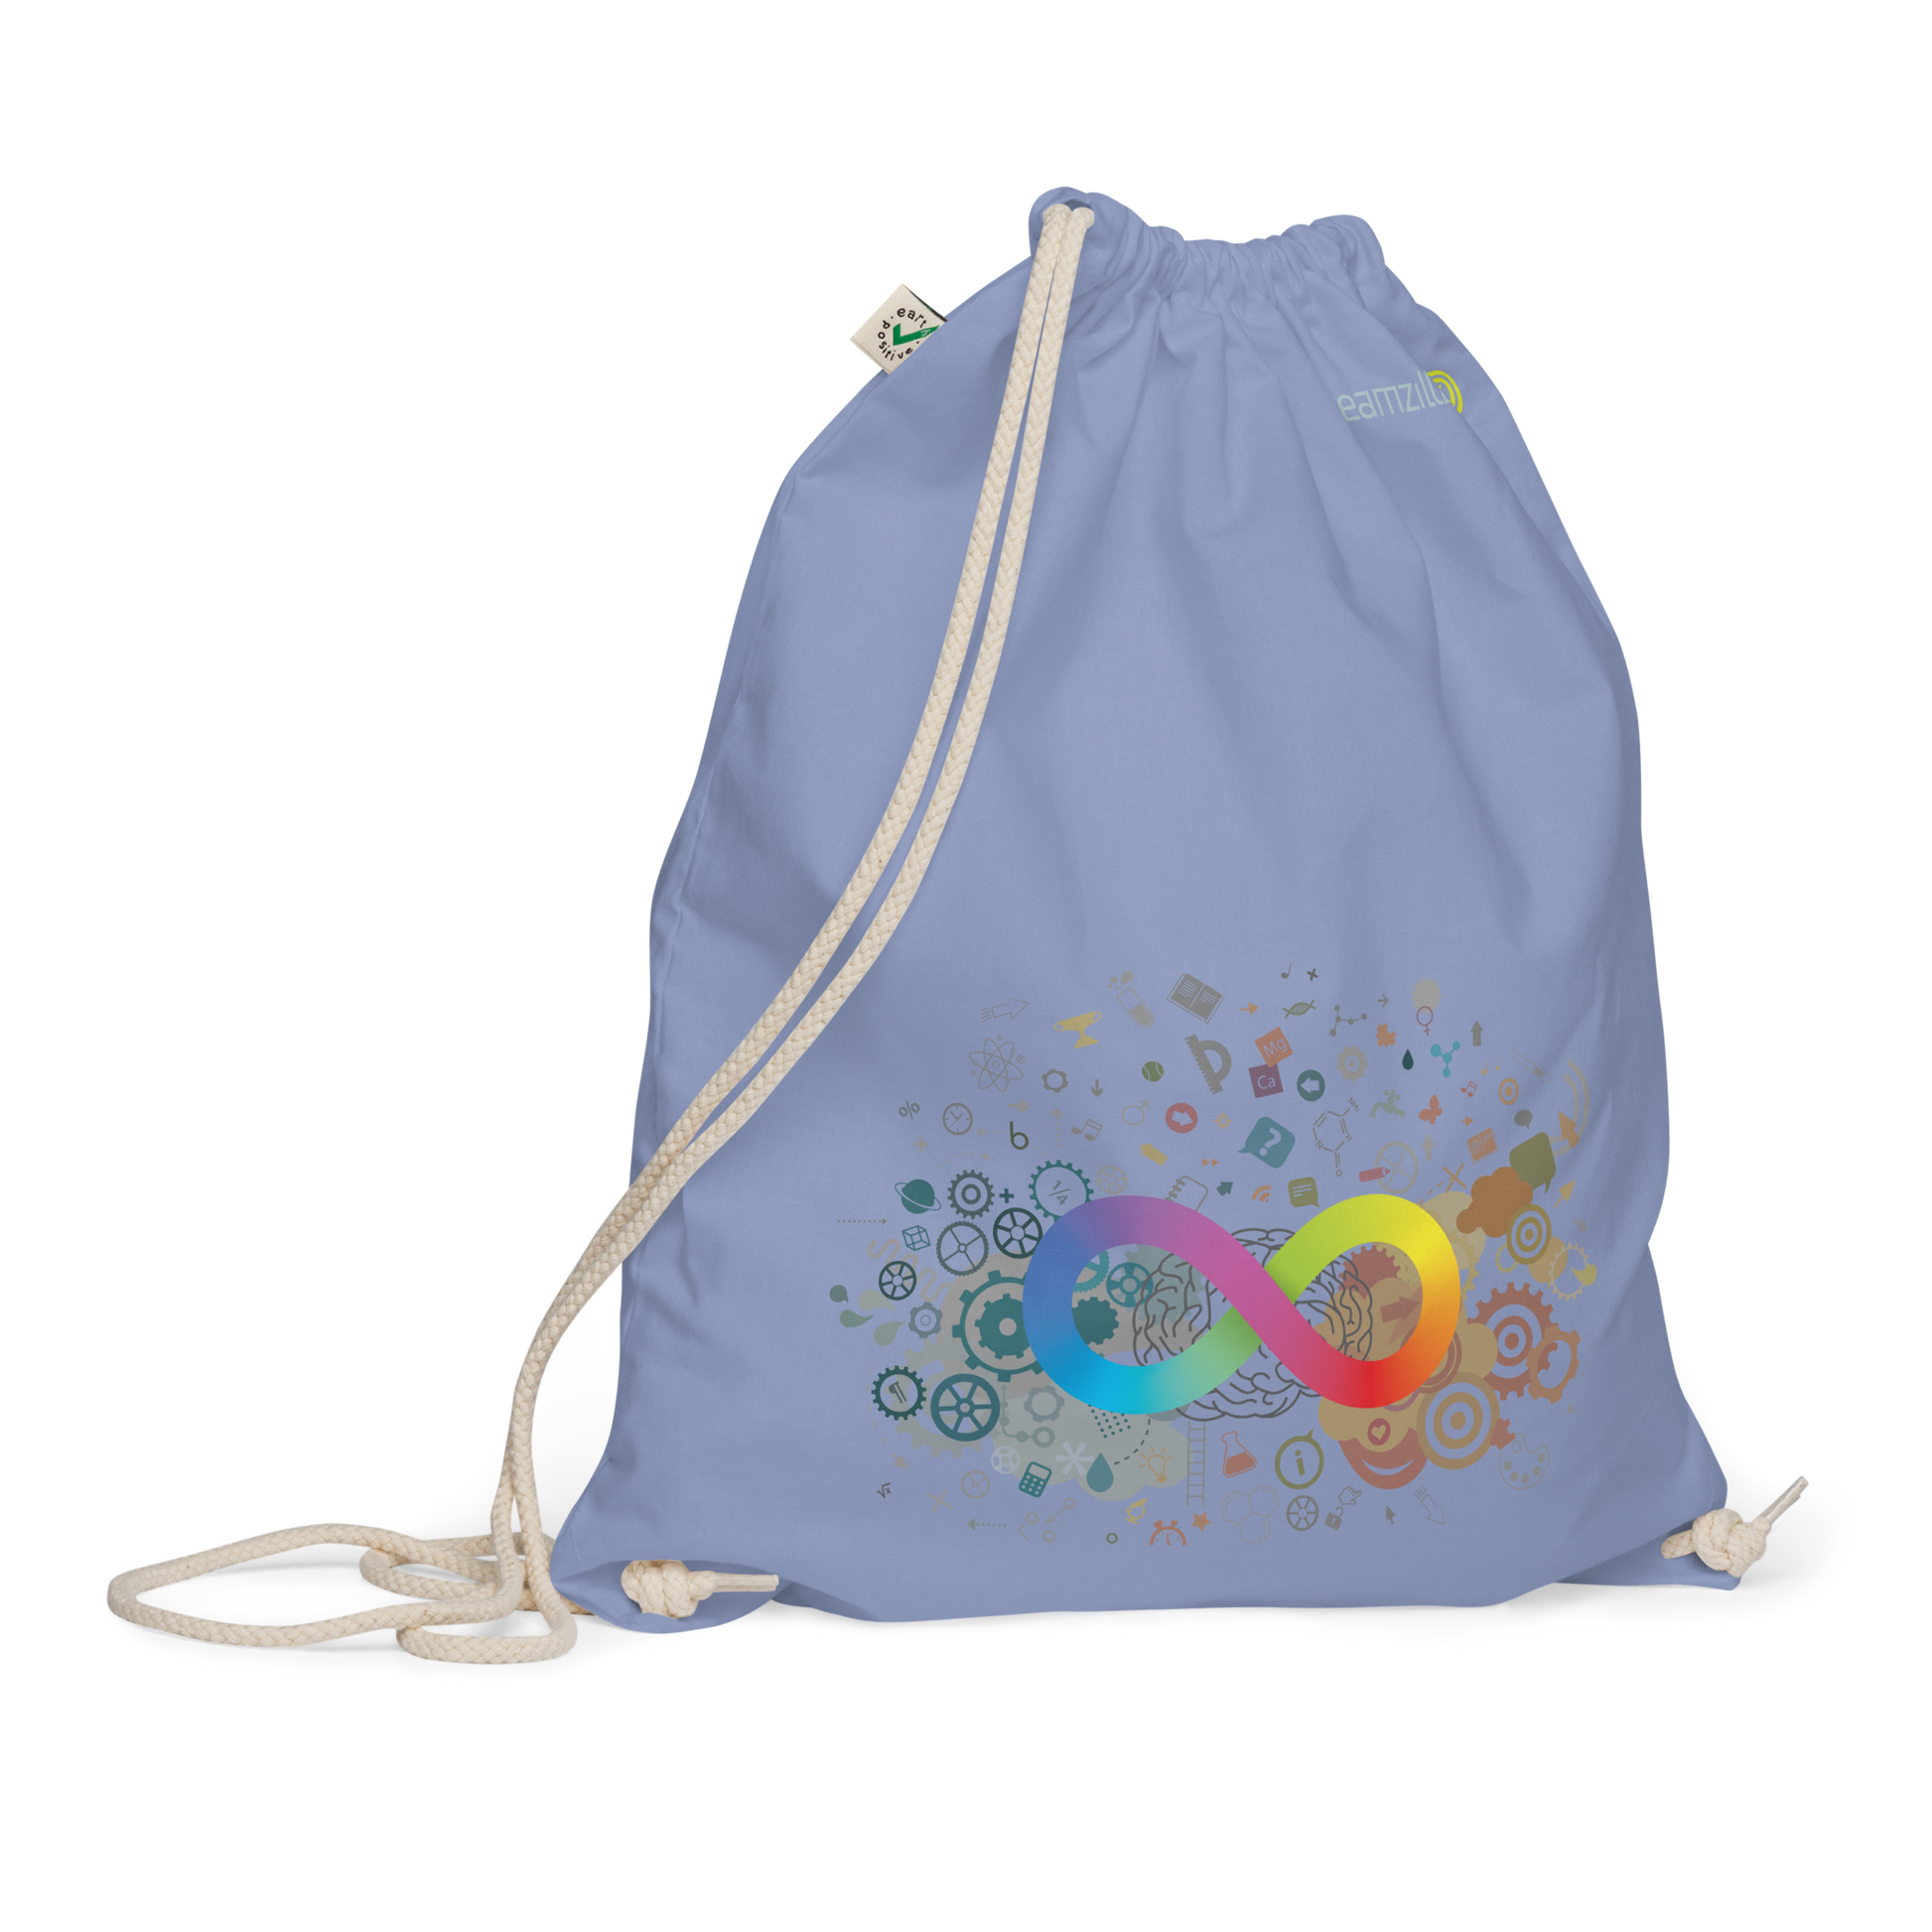 Neurodiversity Rainbow Infinity EarthPositive Cotton Drawstring Bag in Light Denim